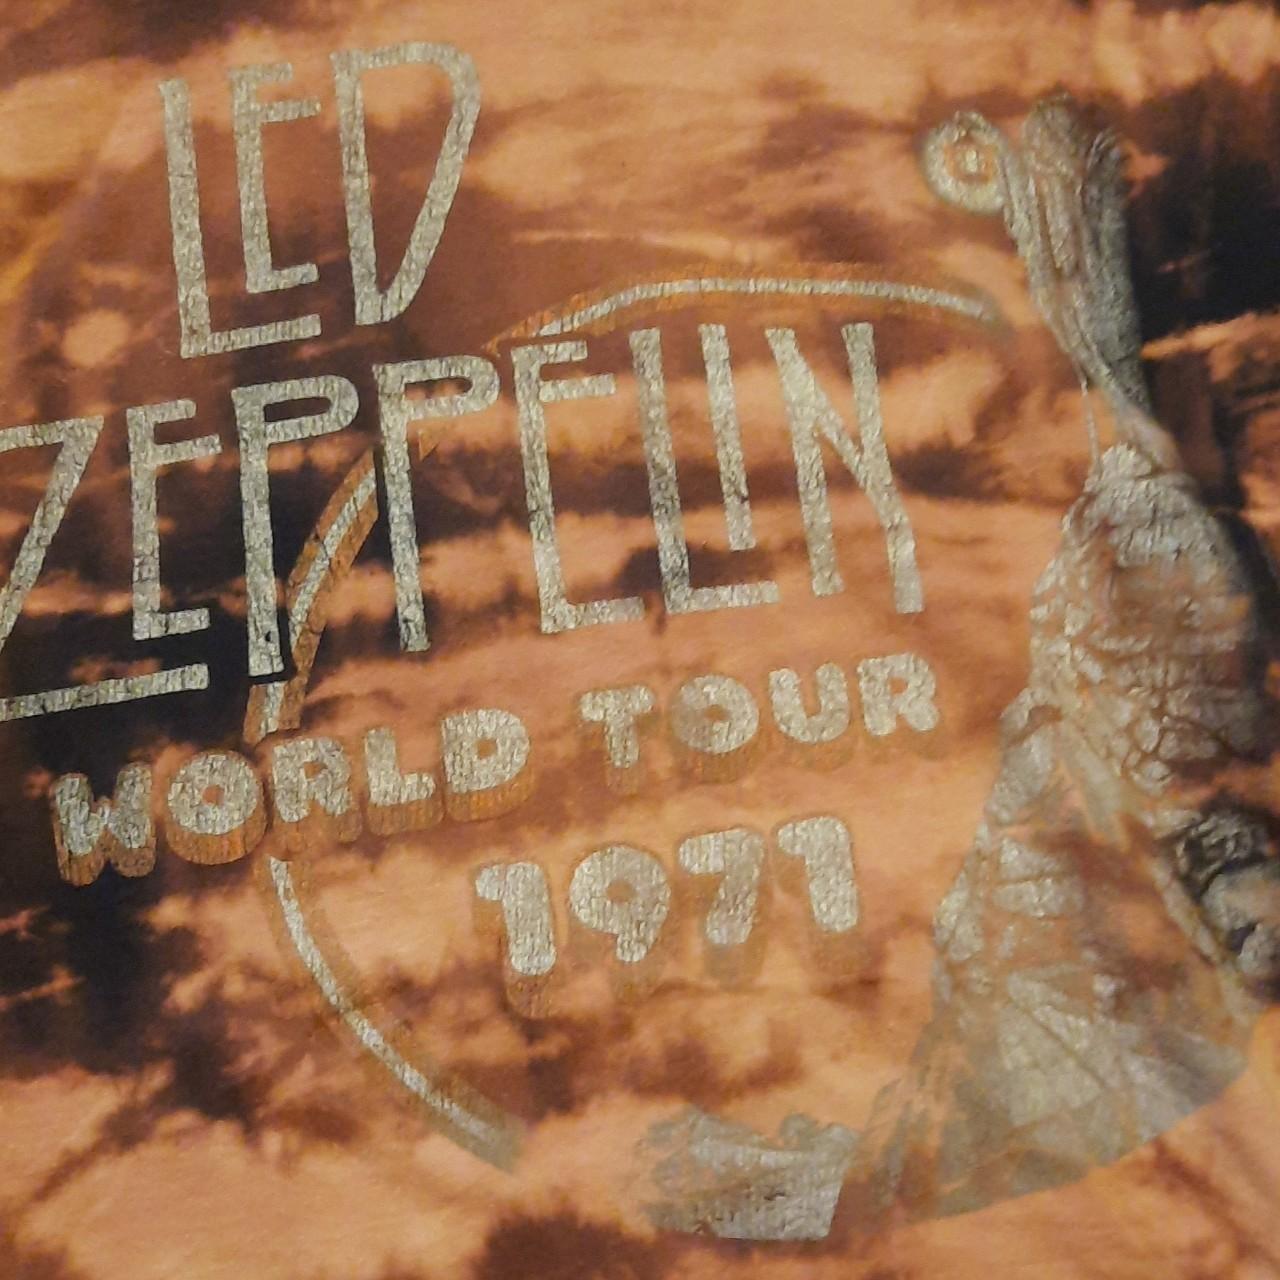 Upcycled bleached Led Zepplin world tour 1971 - Depop